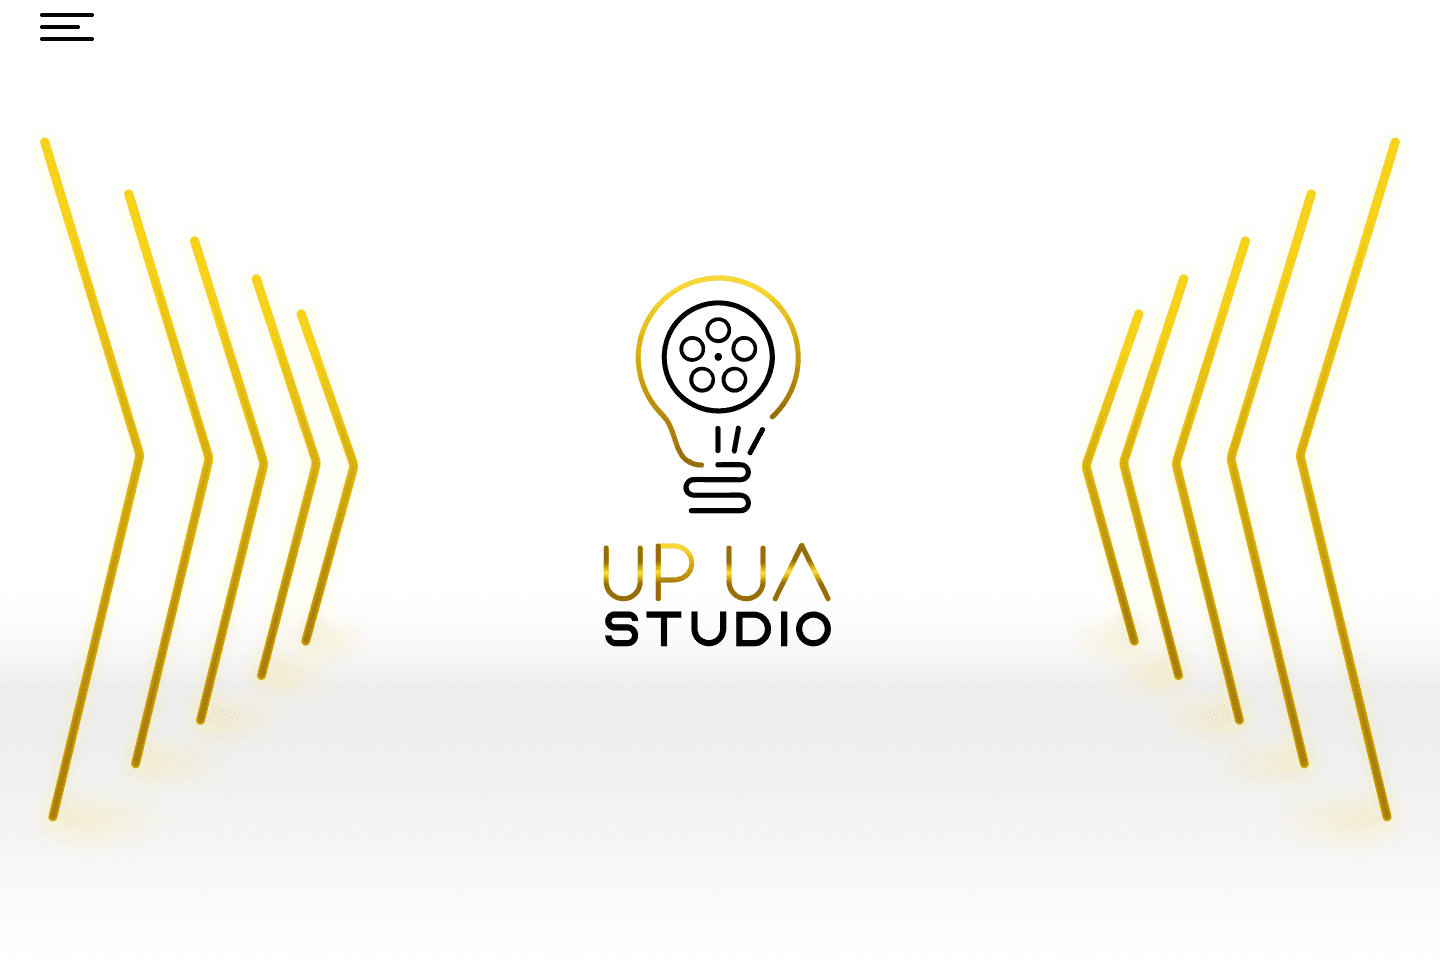 UP_UA_STUDIO bannière